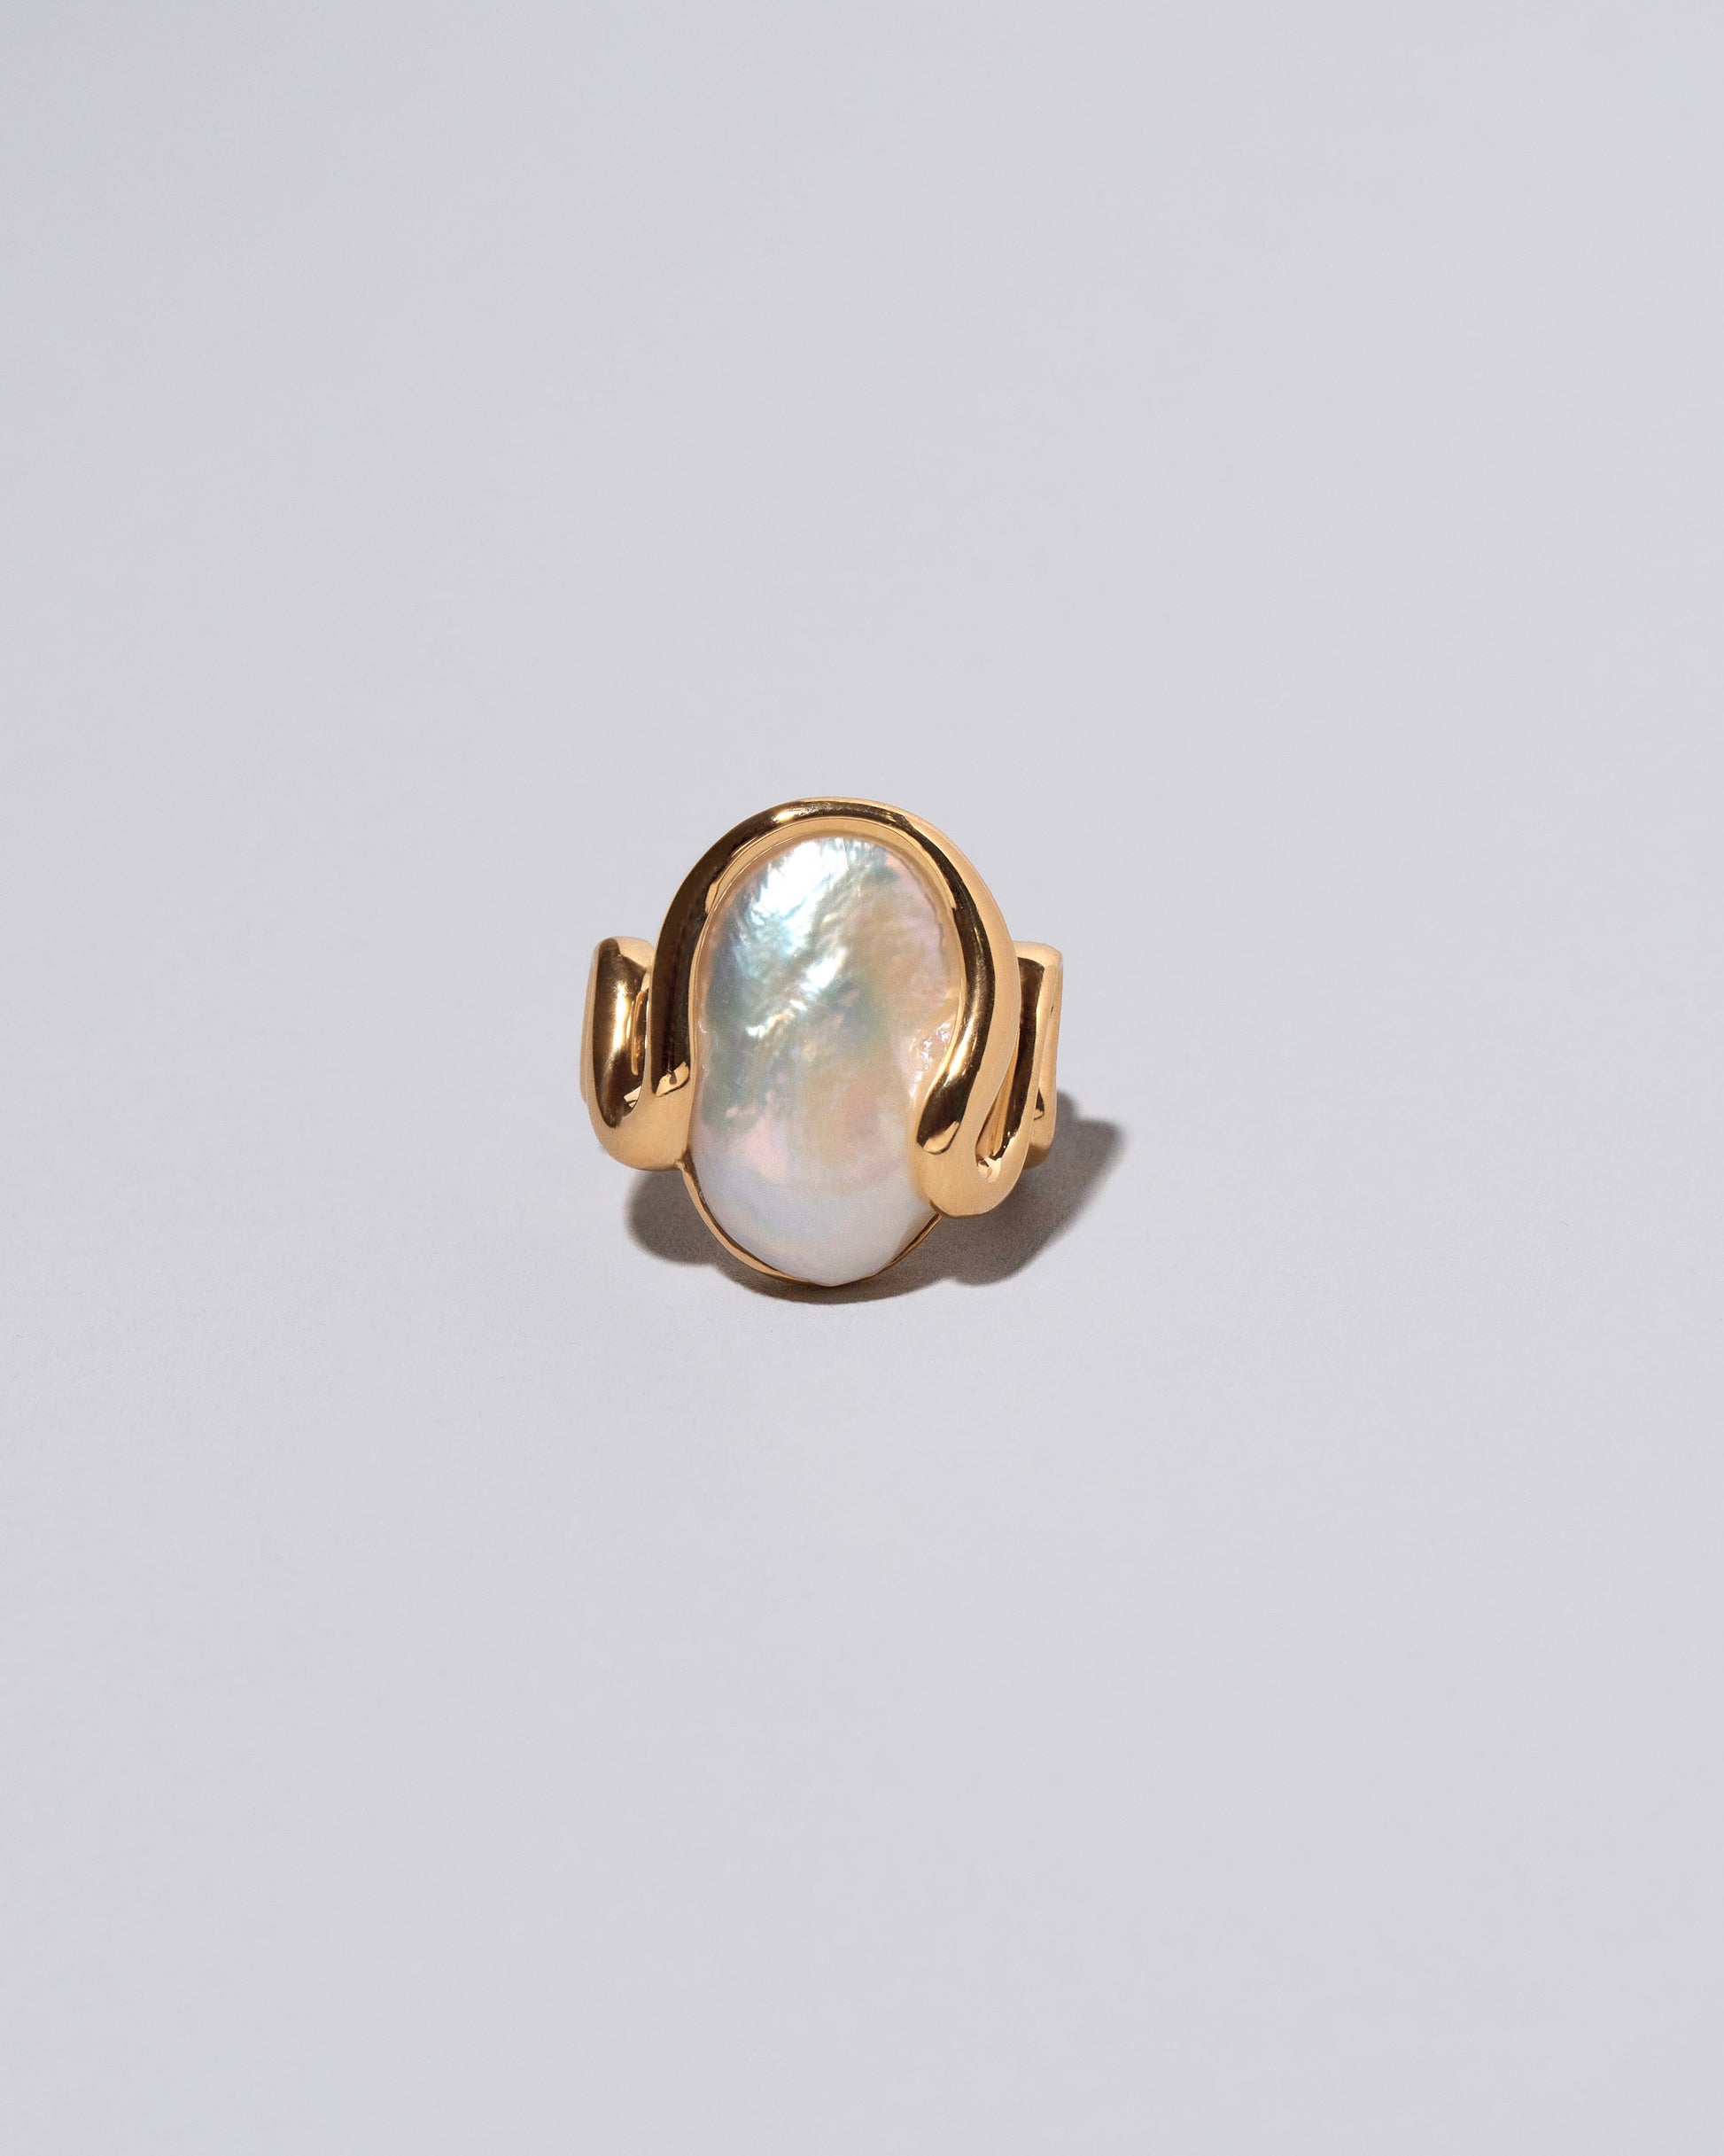 Weaver Ring on light color background.